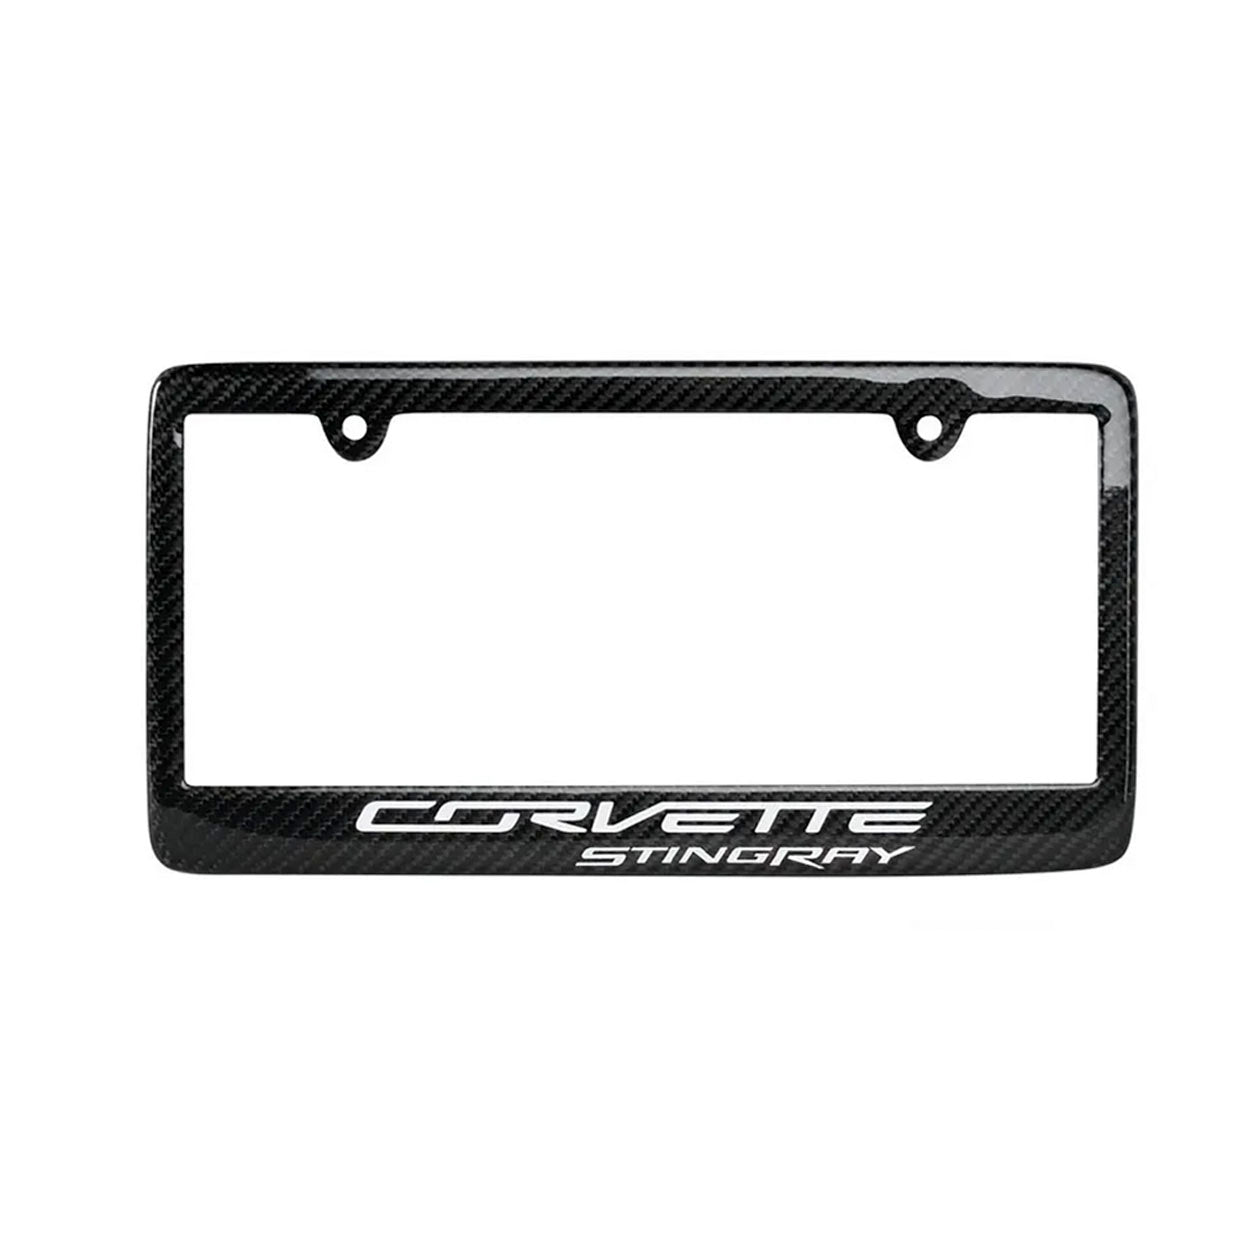 C7 Corvette License Plate Frame - Carbon Fiber W/Corvette Stingray Script